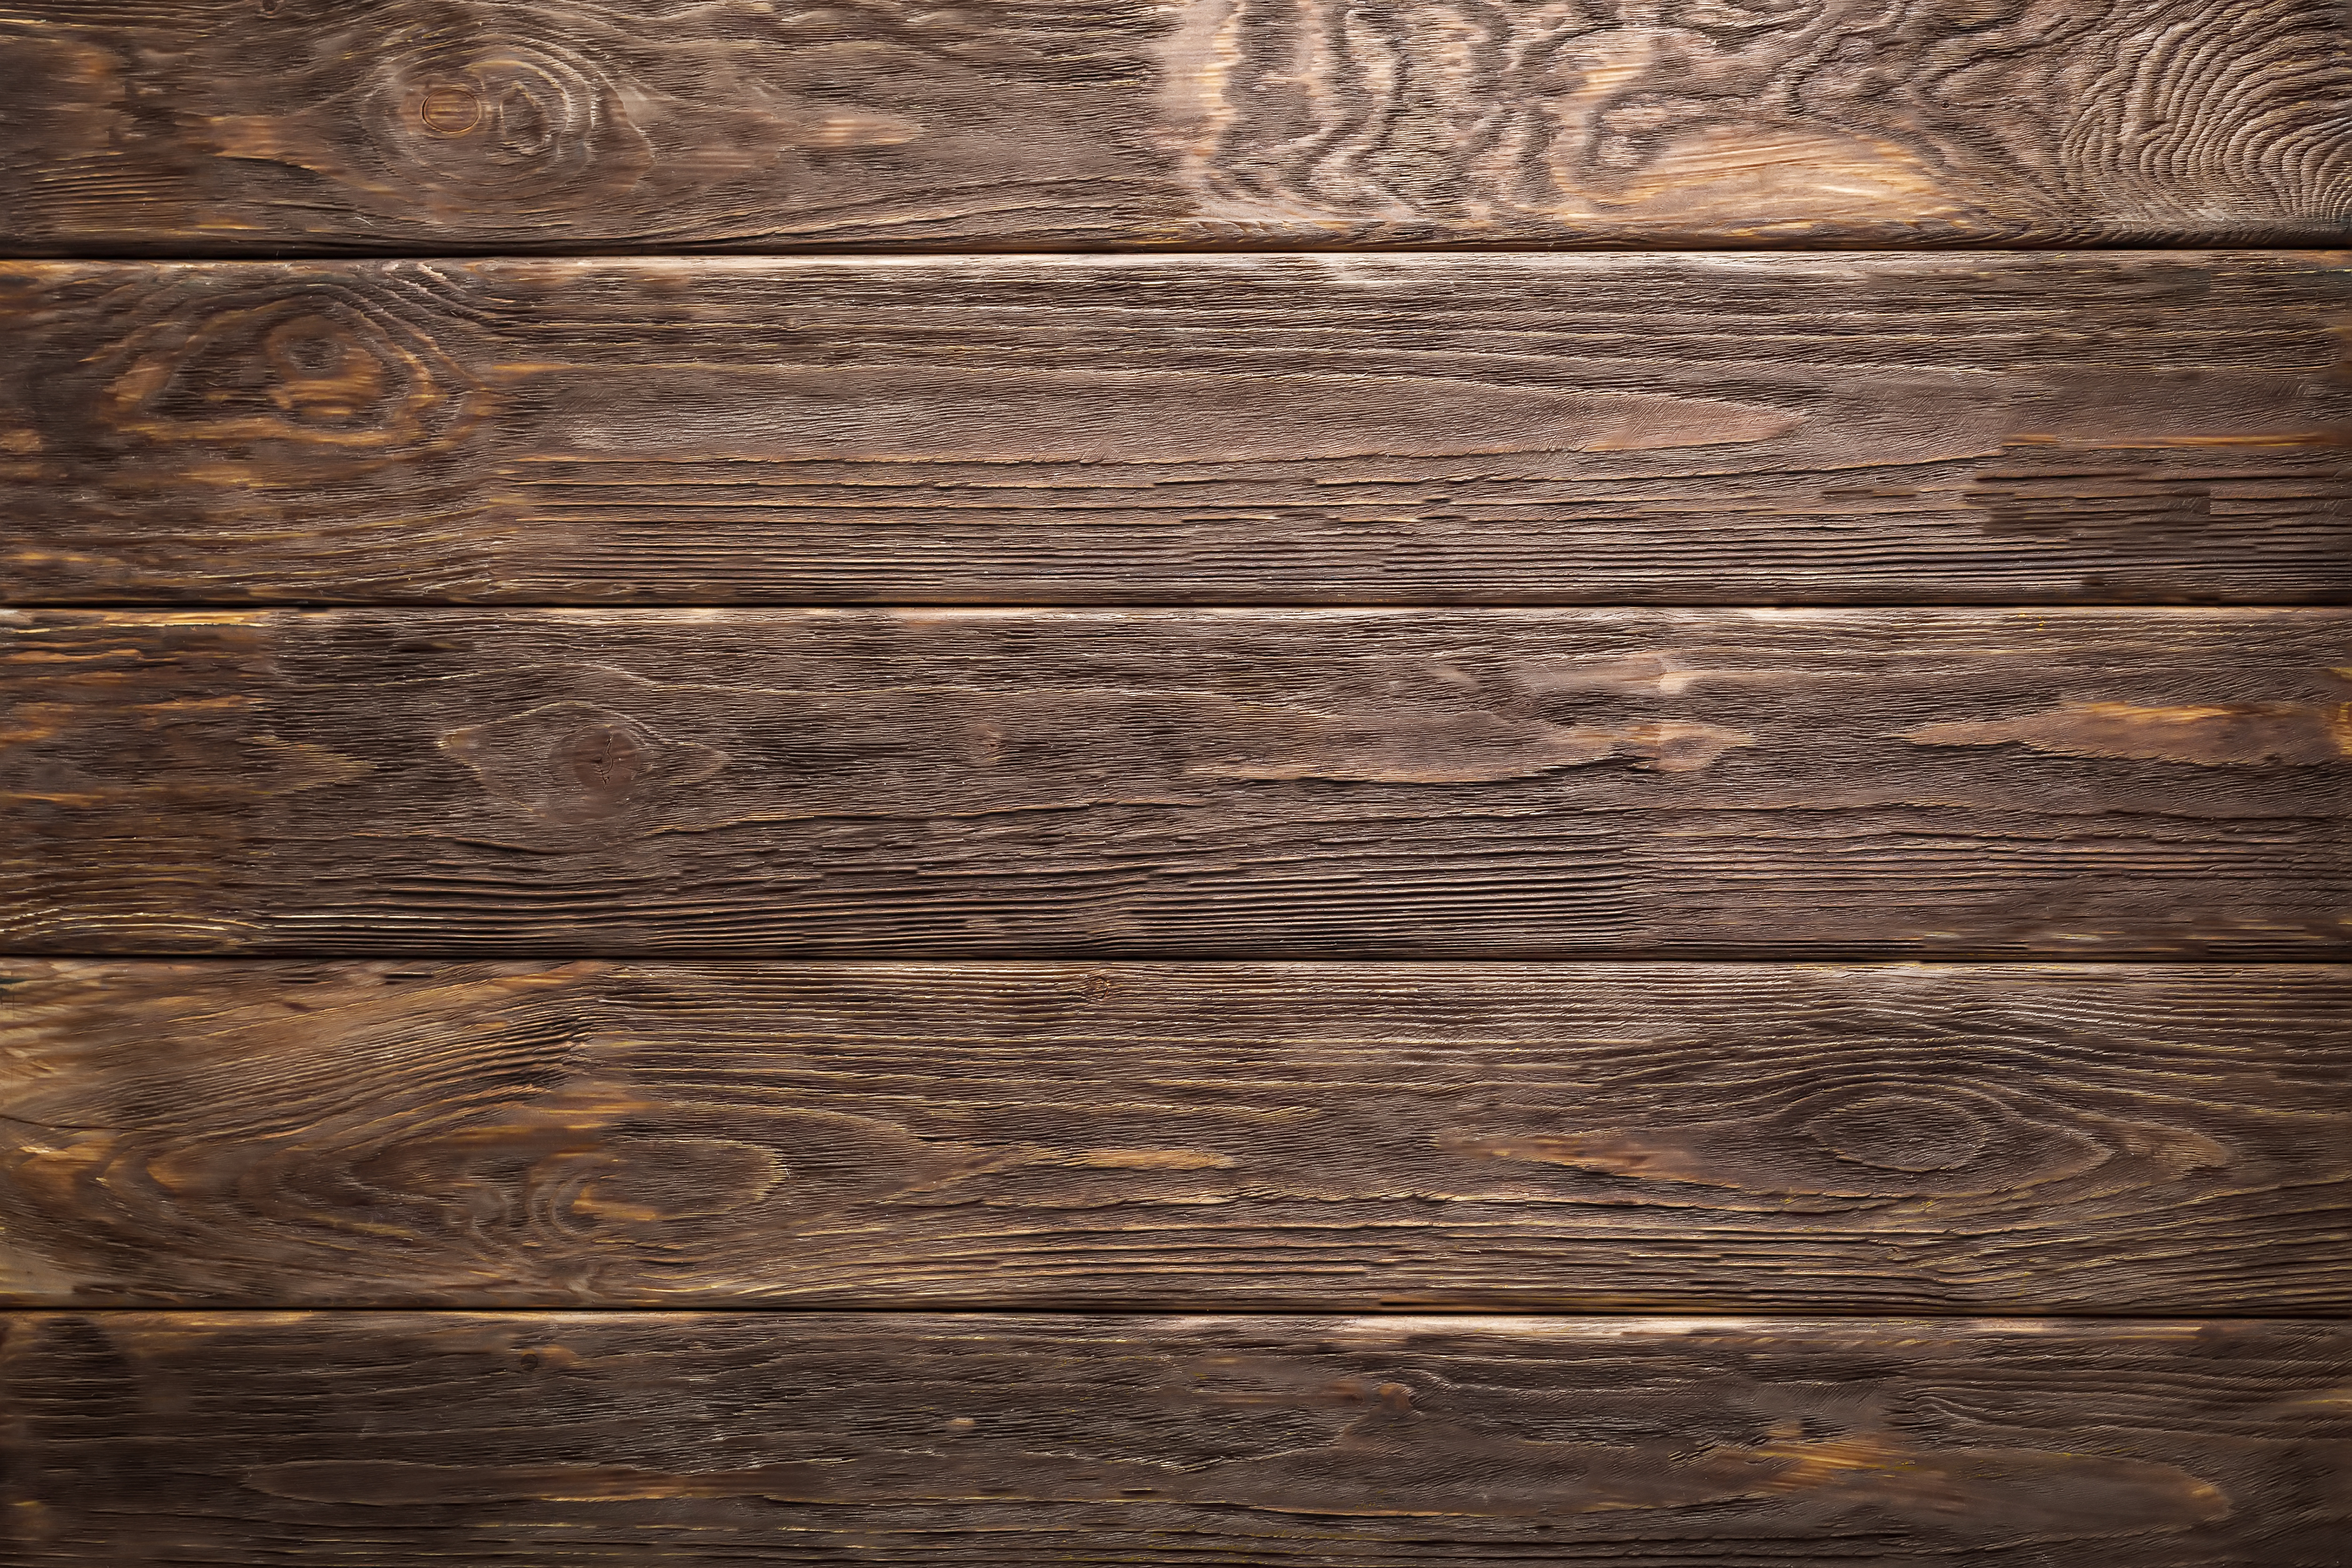 Dark Wood Texture Background | Gallery Yopriceville - High-Quality